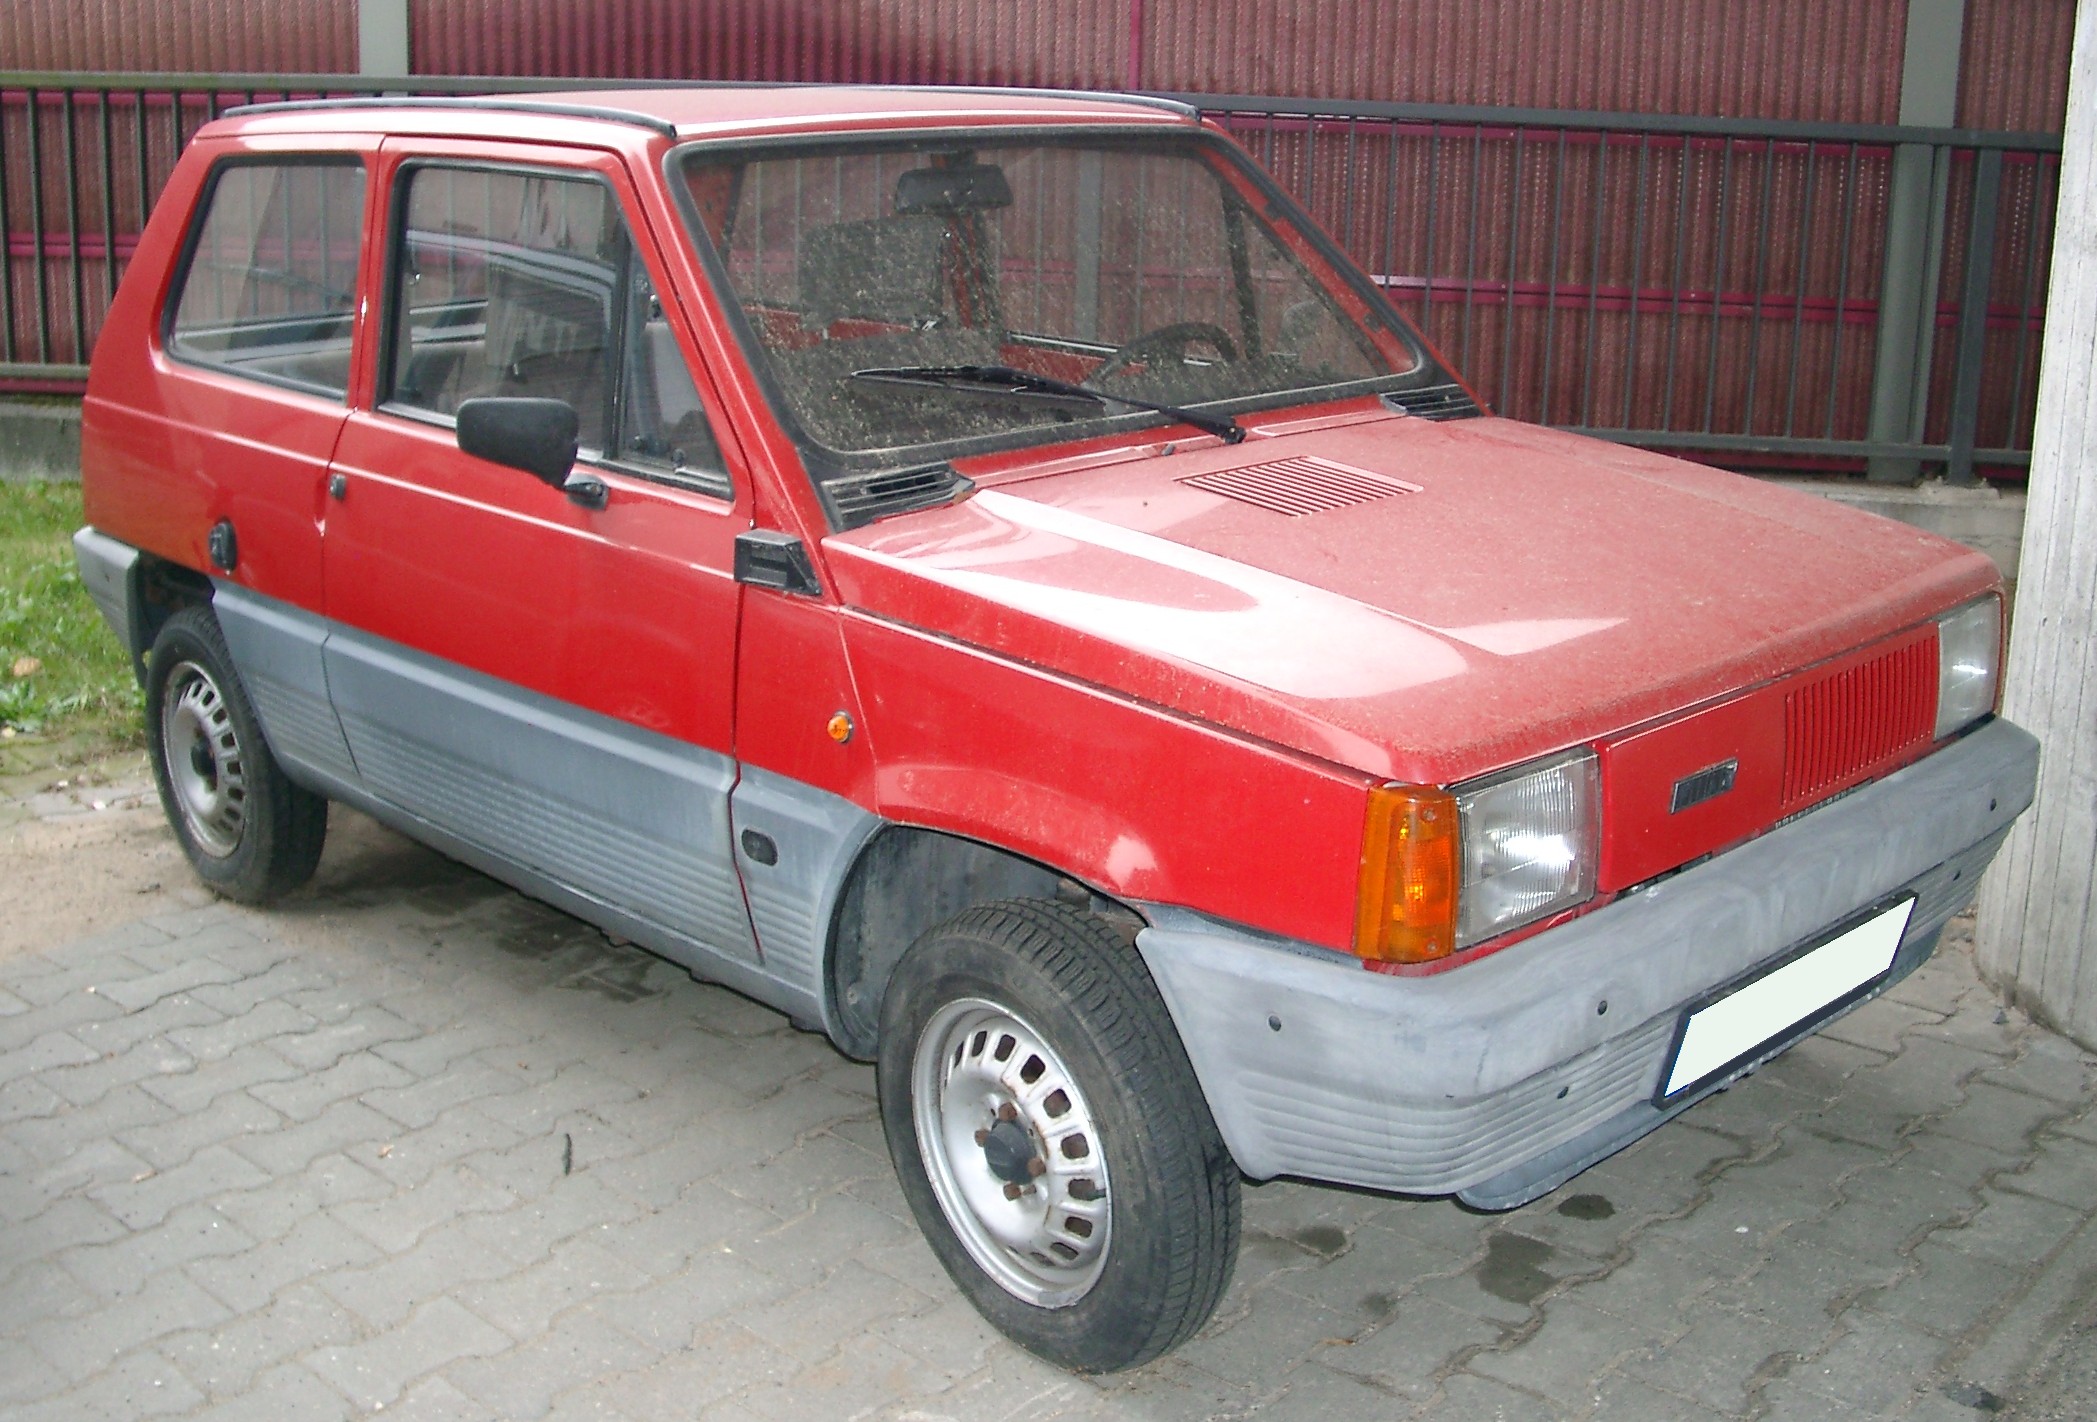 File:Fiat Panda front 20071002.jpg - Wikimedia Commons